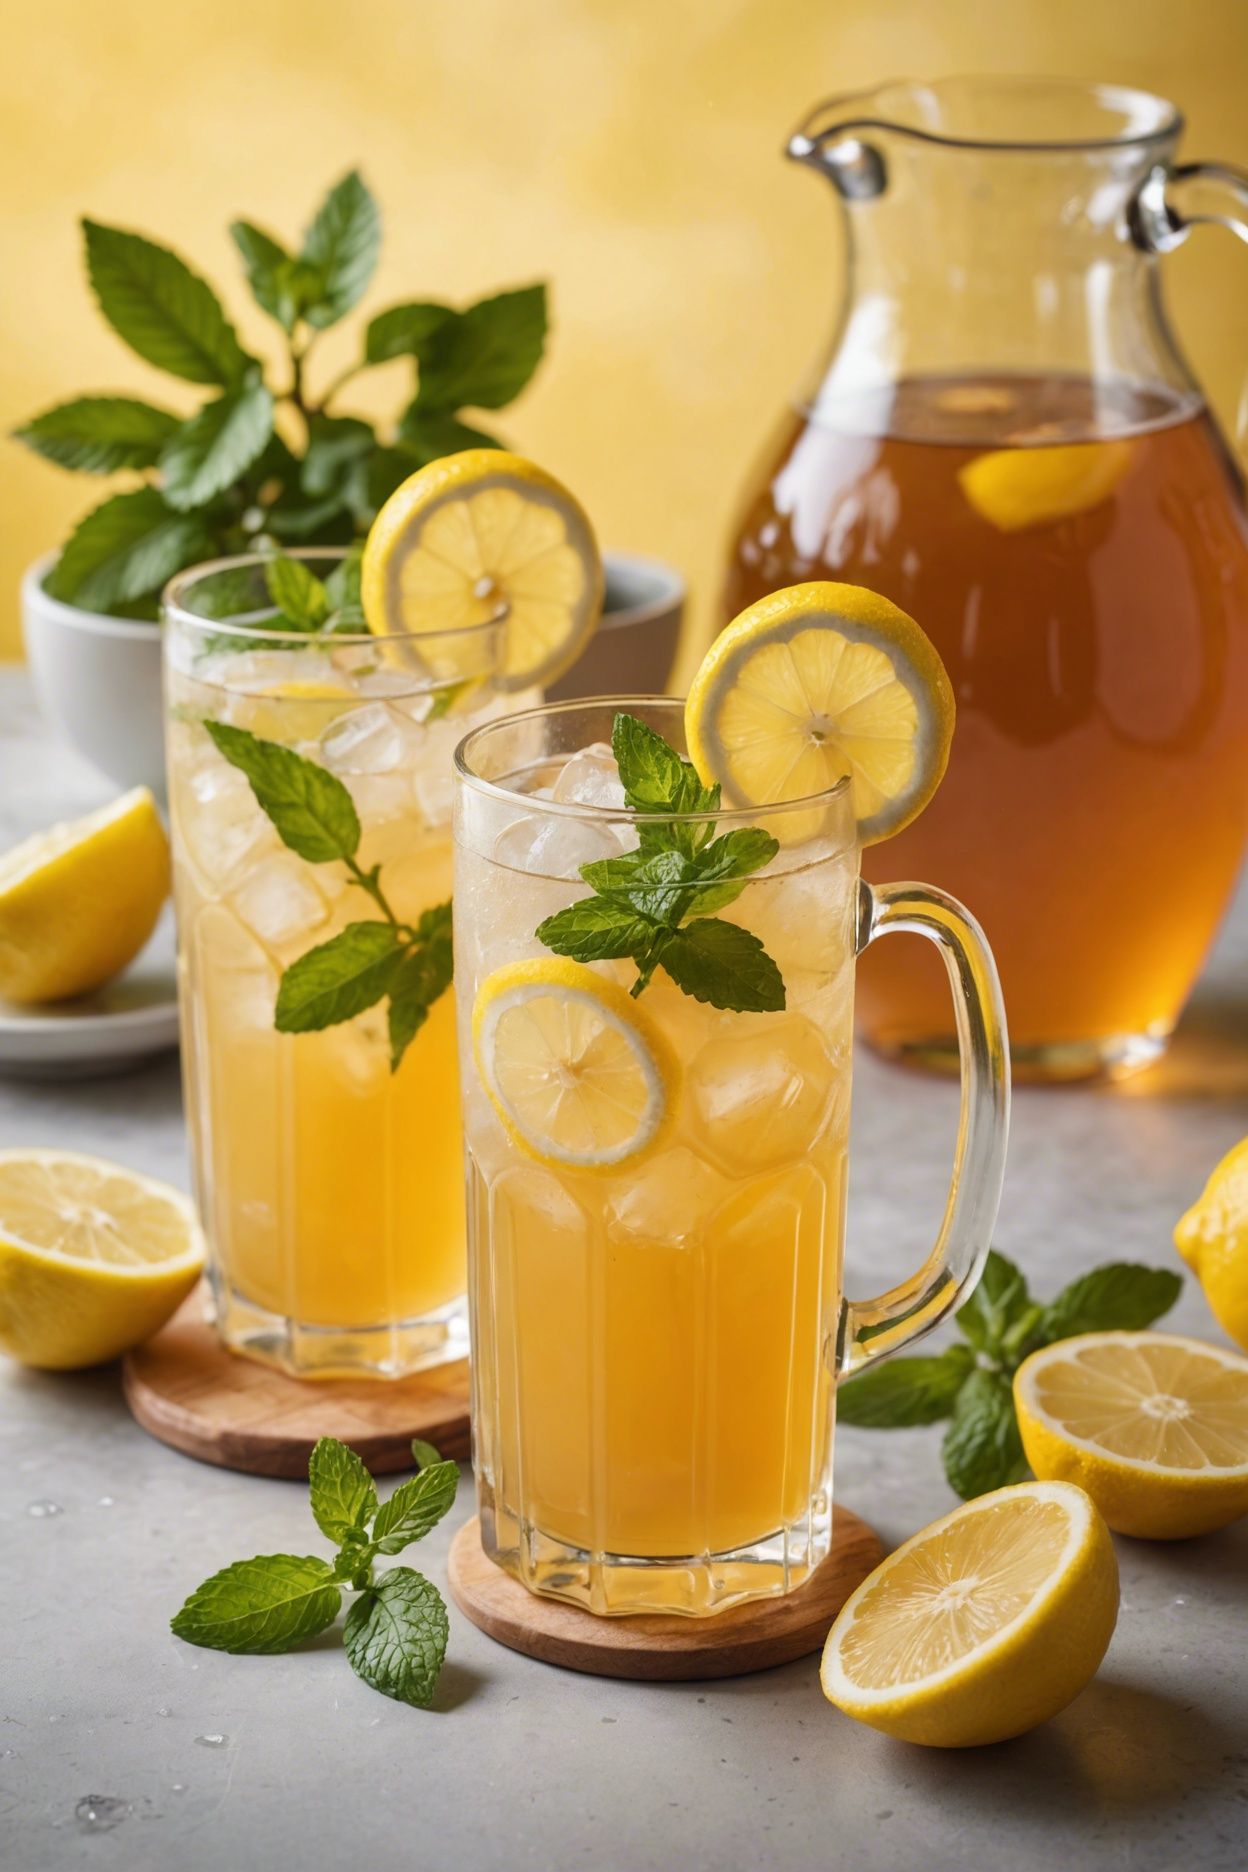 Honey Lemonade